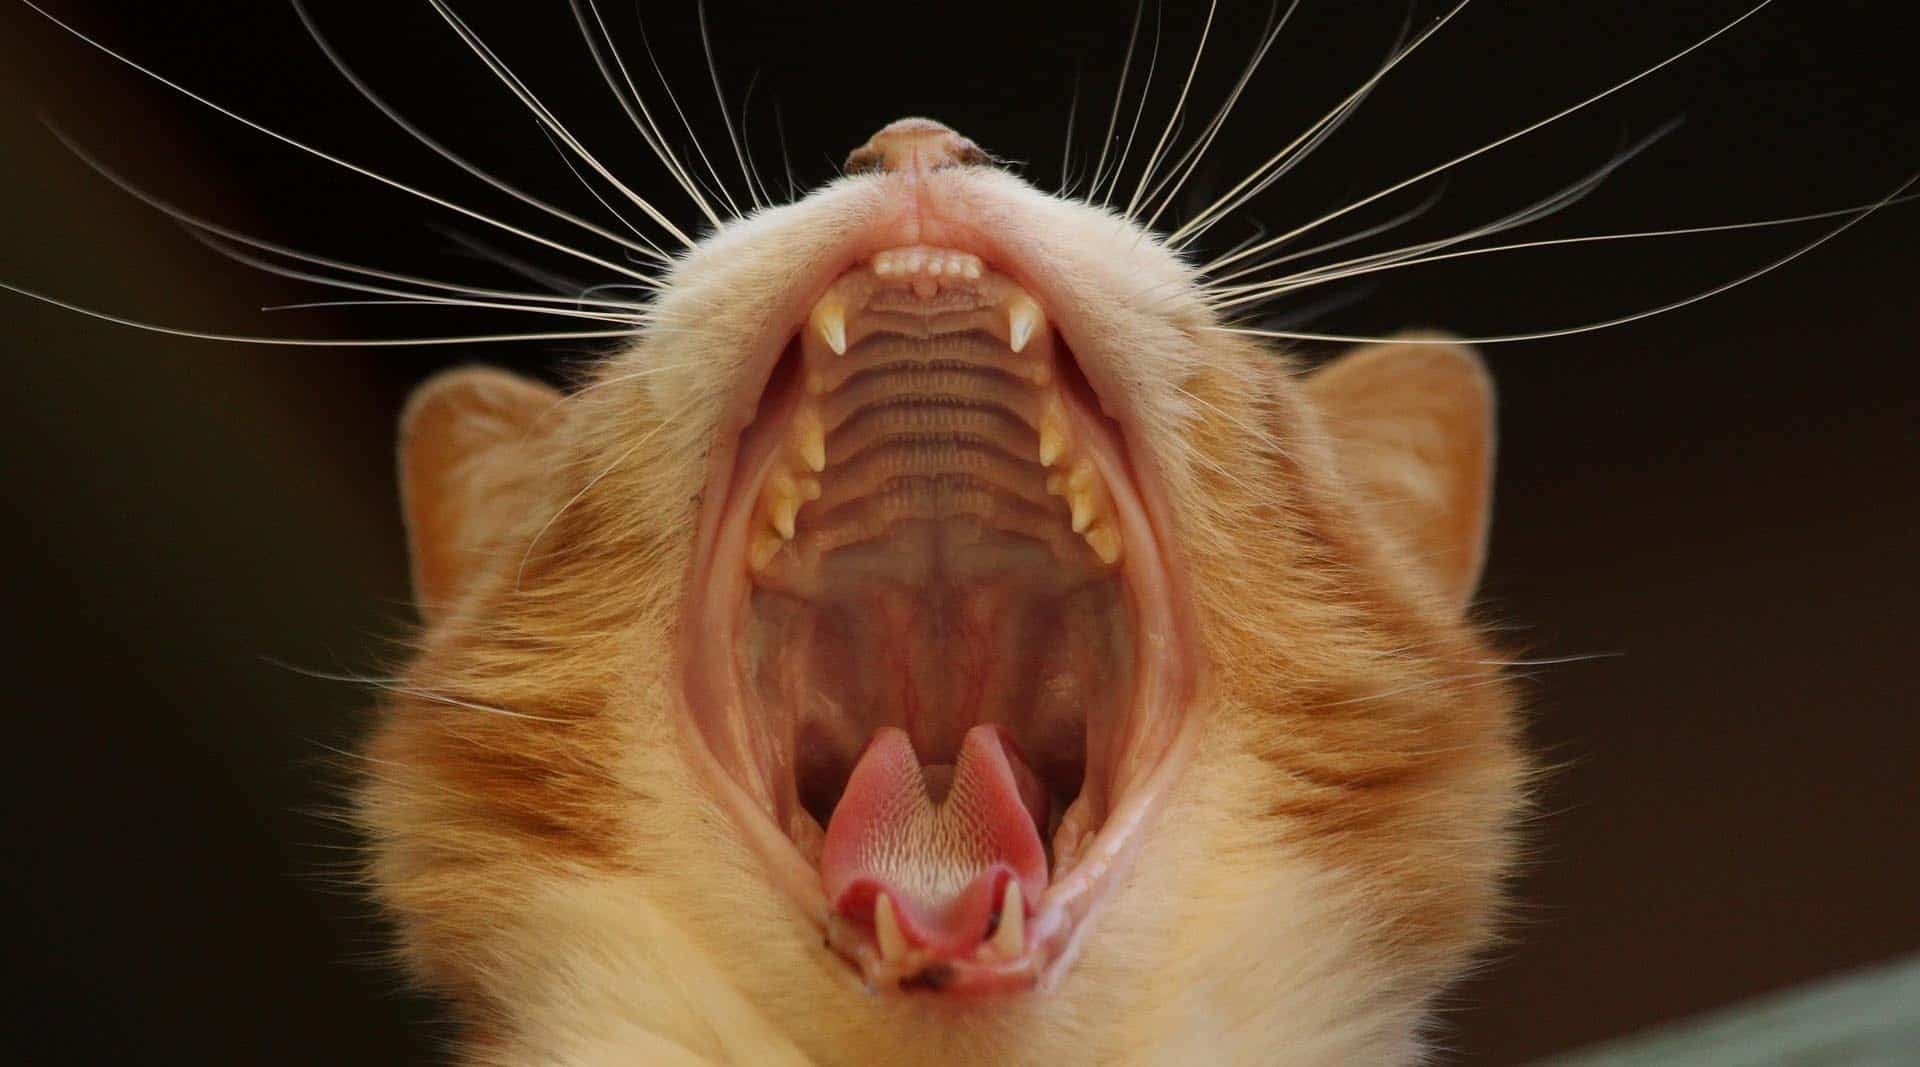 Cat dental disease, adelaide Vet